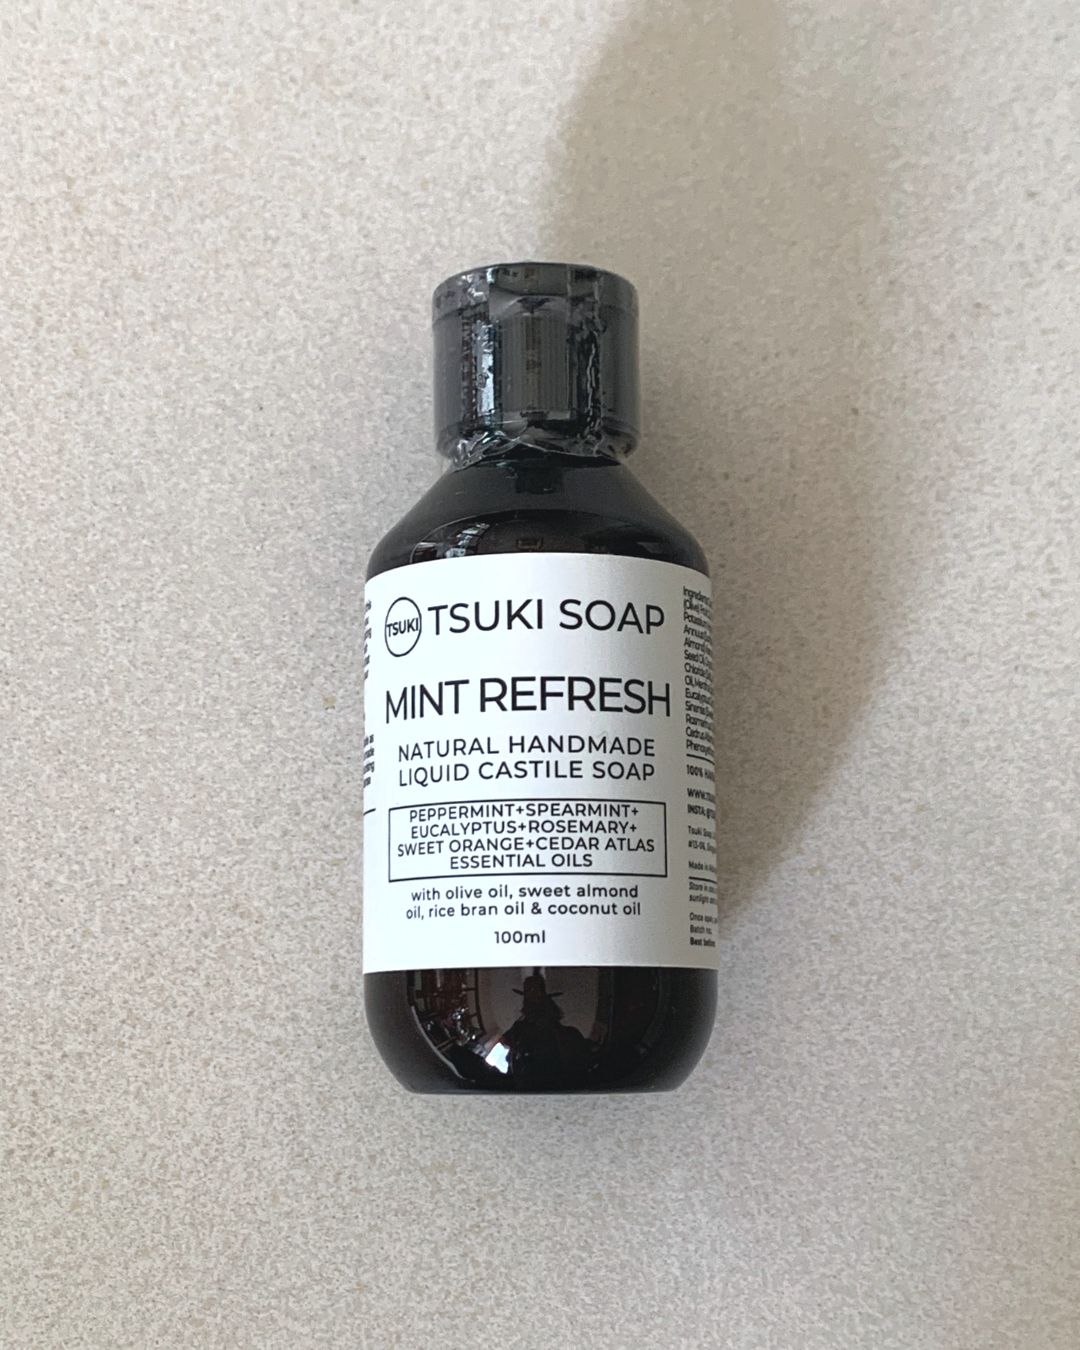 Mint Refresh Liquid Castile Soap - 100ml Travel Size